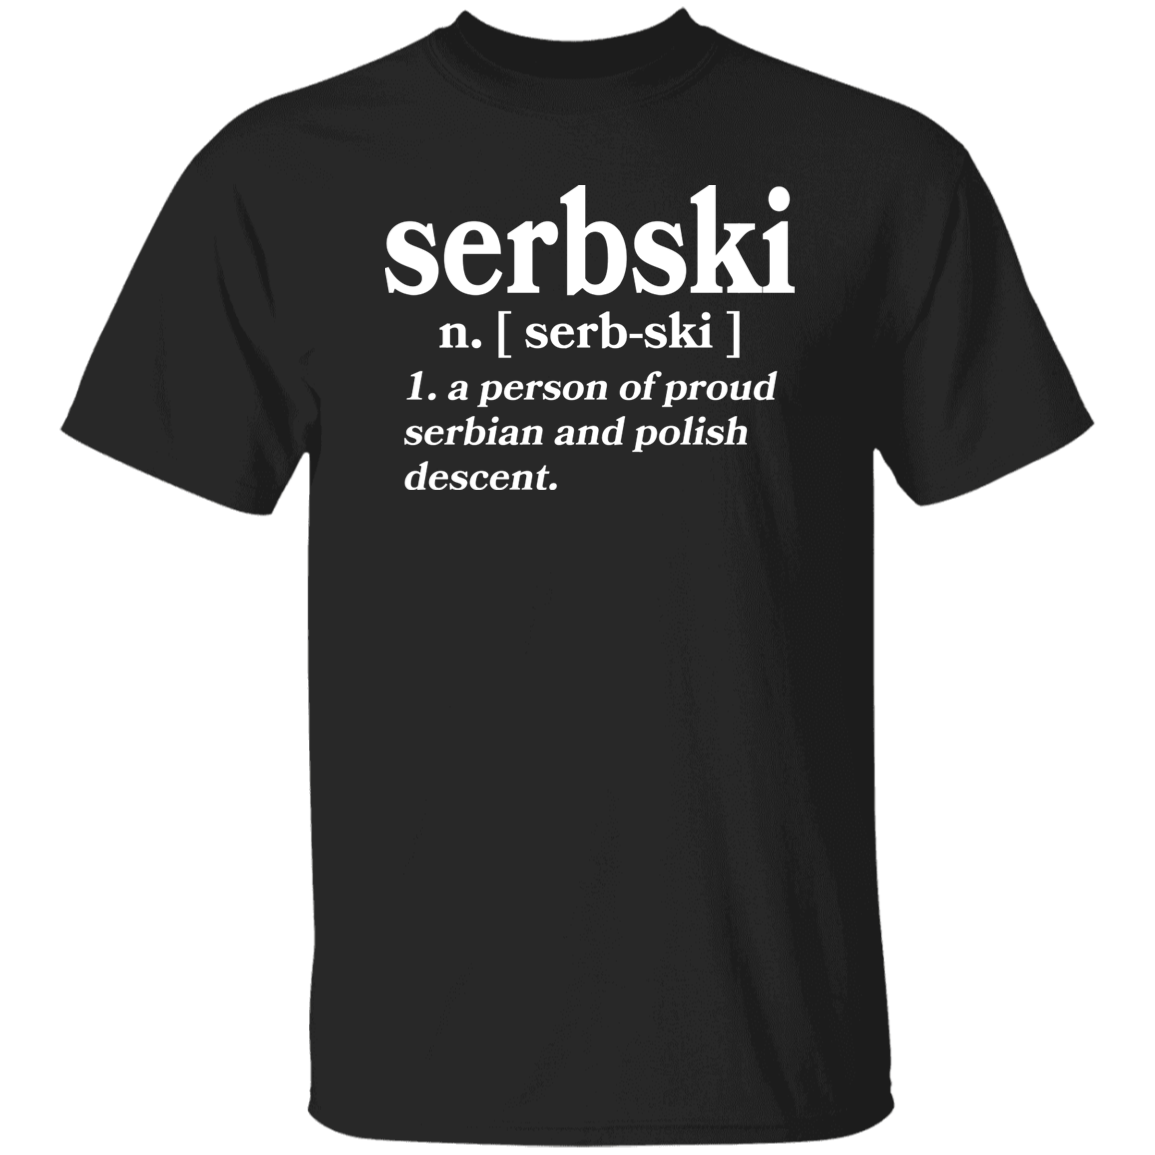 Serbski A Person Of Serbian and Polish Descent Apparel CustomCat G500 5.3 oz. T-Shirt Black S